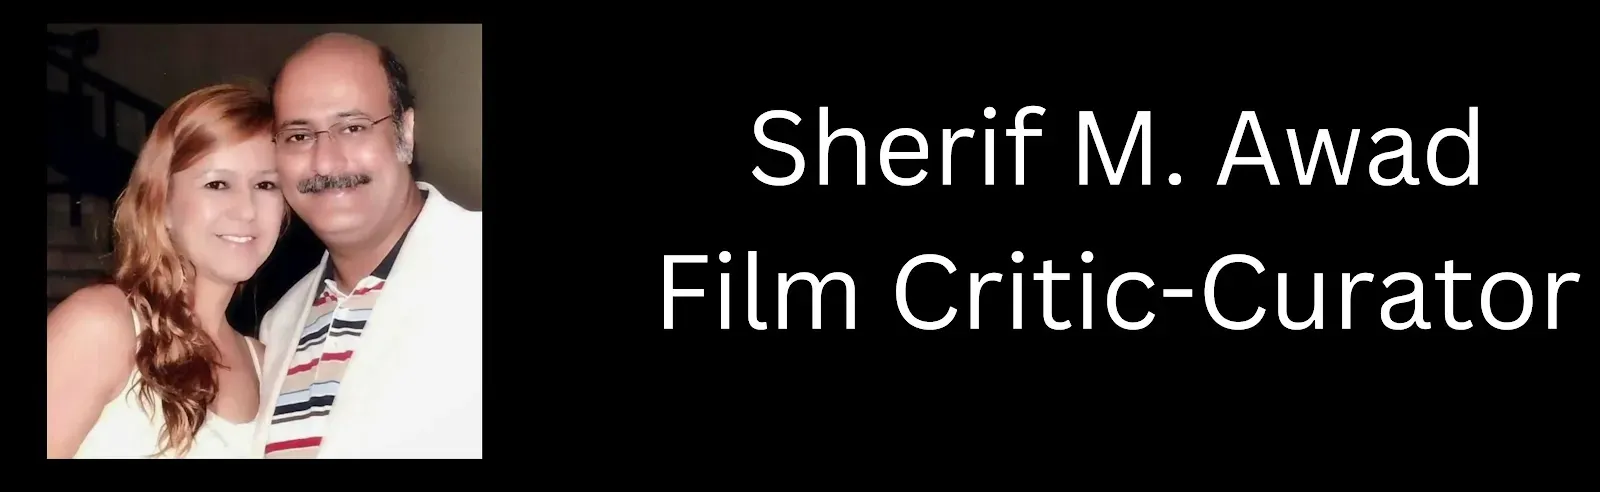 SHERIF M. AWAD-FILM CRITIC/CURATOR/PROGRAMMER-EGYPT-ECUADOR: since 1990